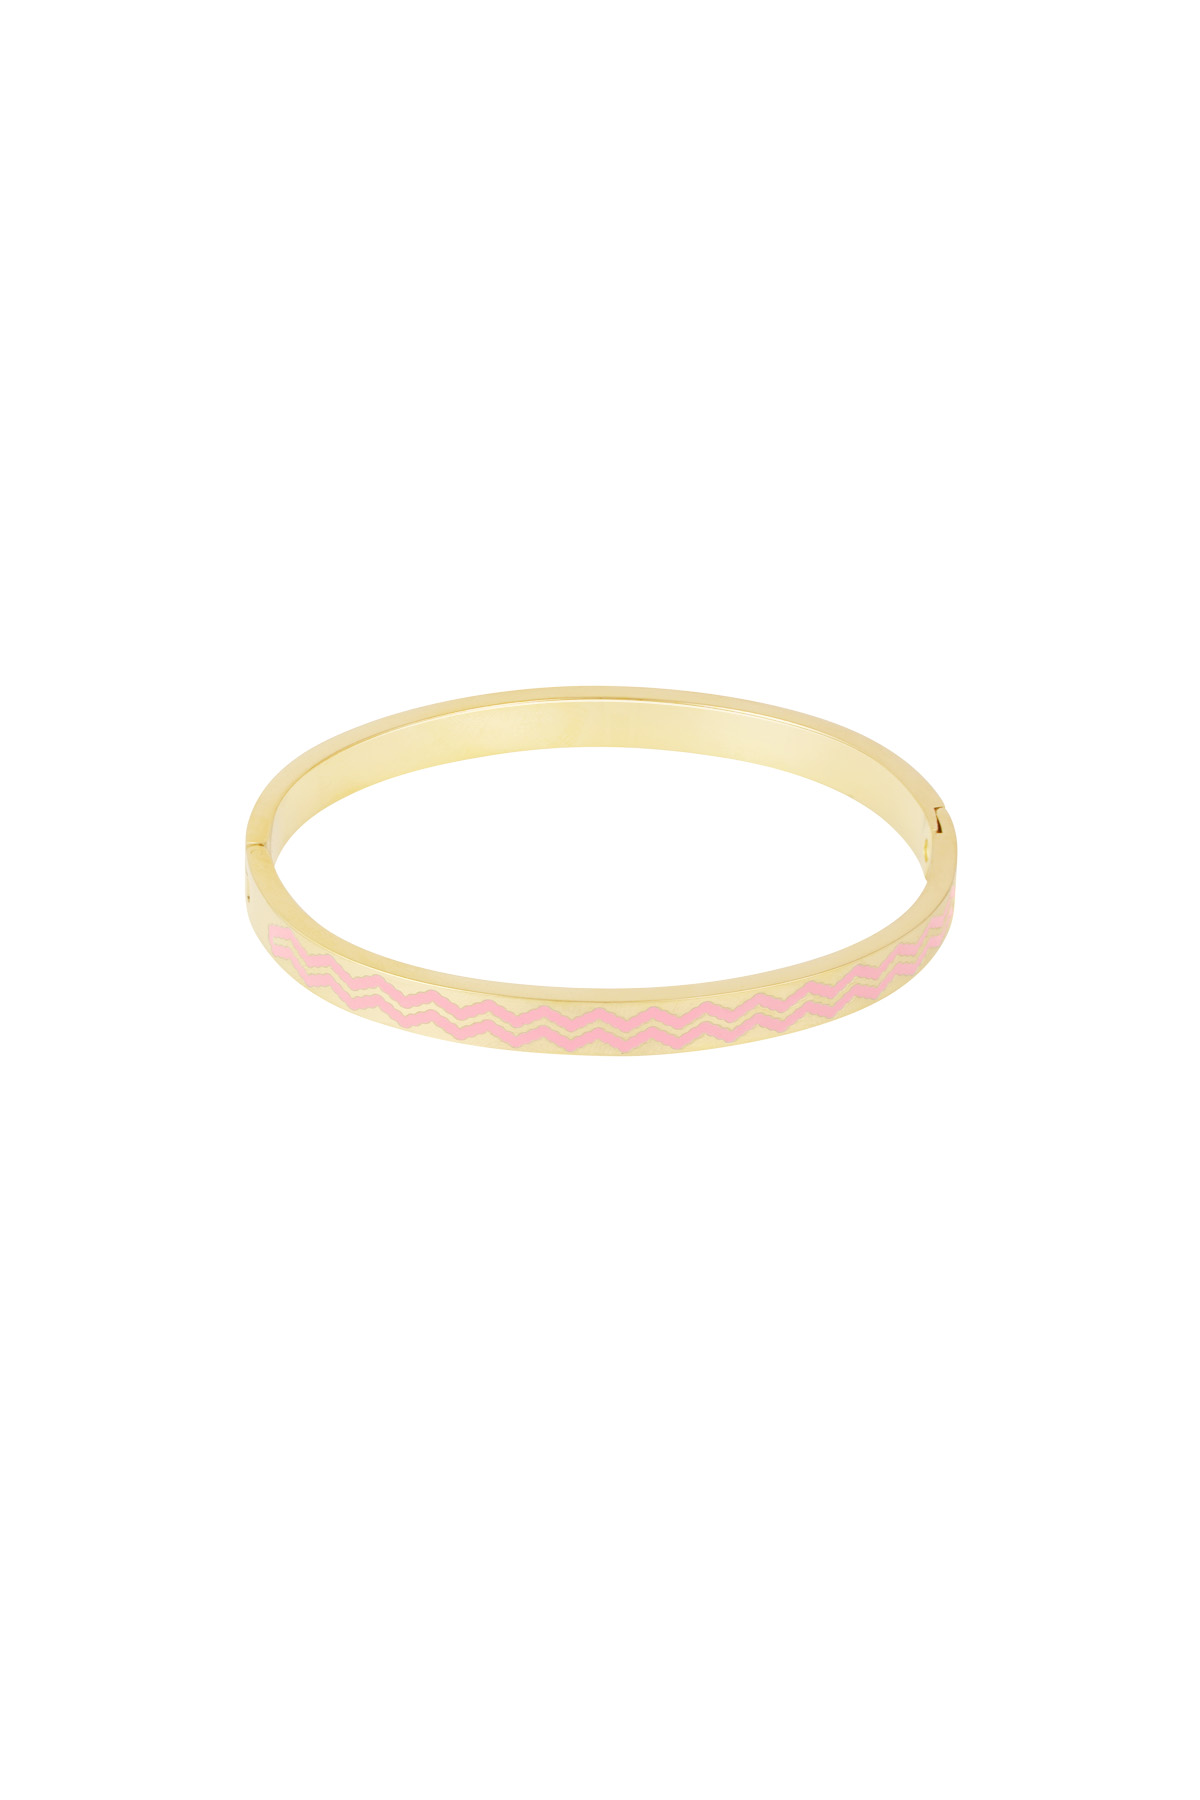 Sklavenarmband mit Wellenprint - rosa/gold  